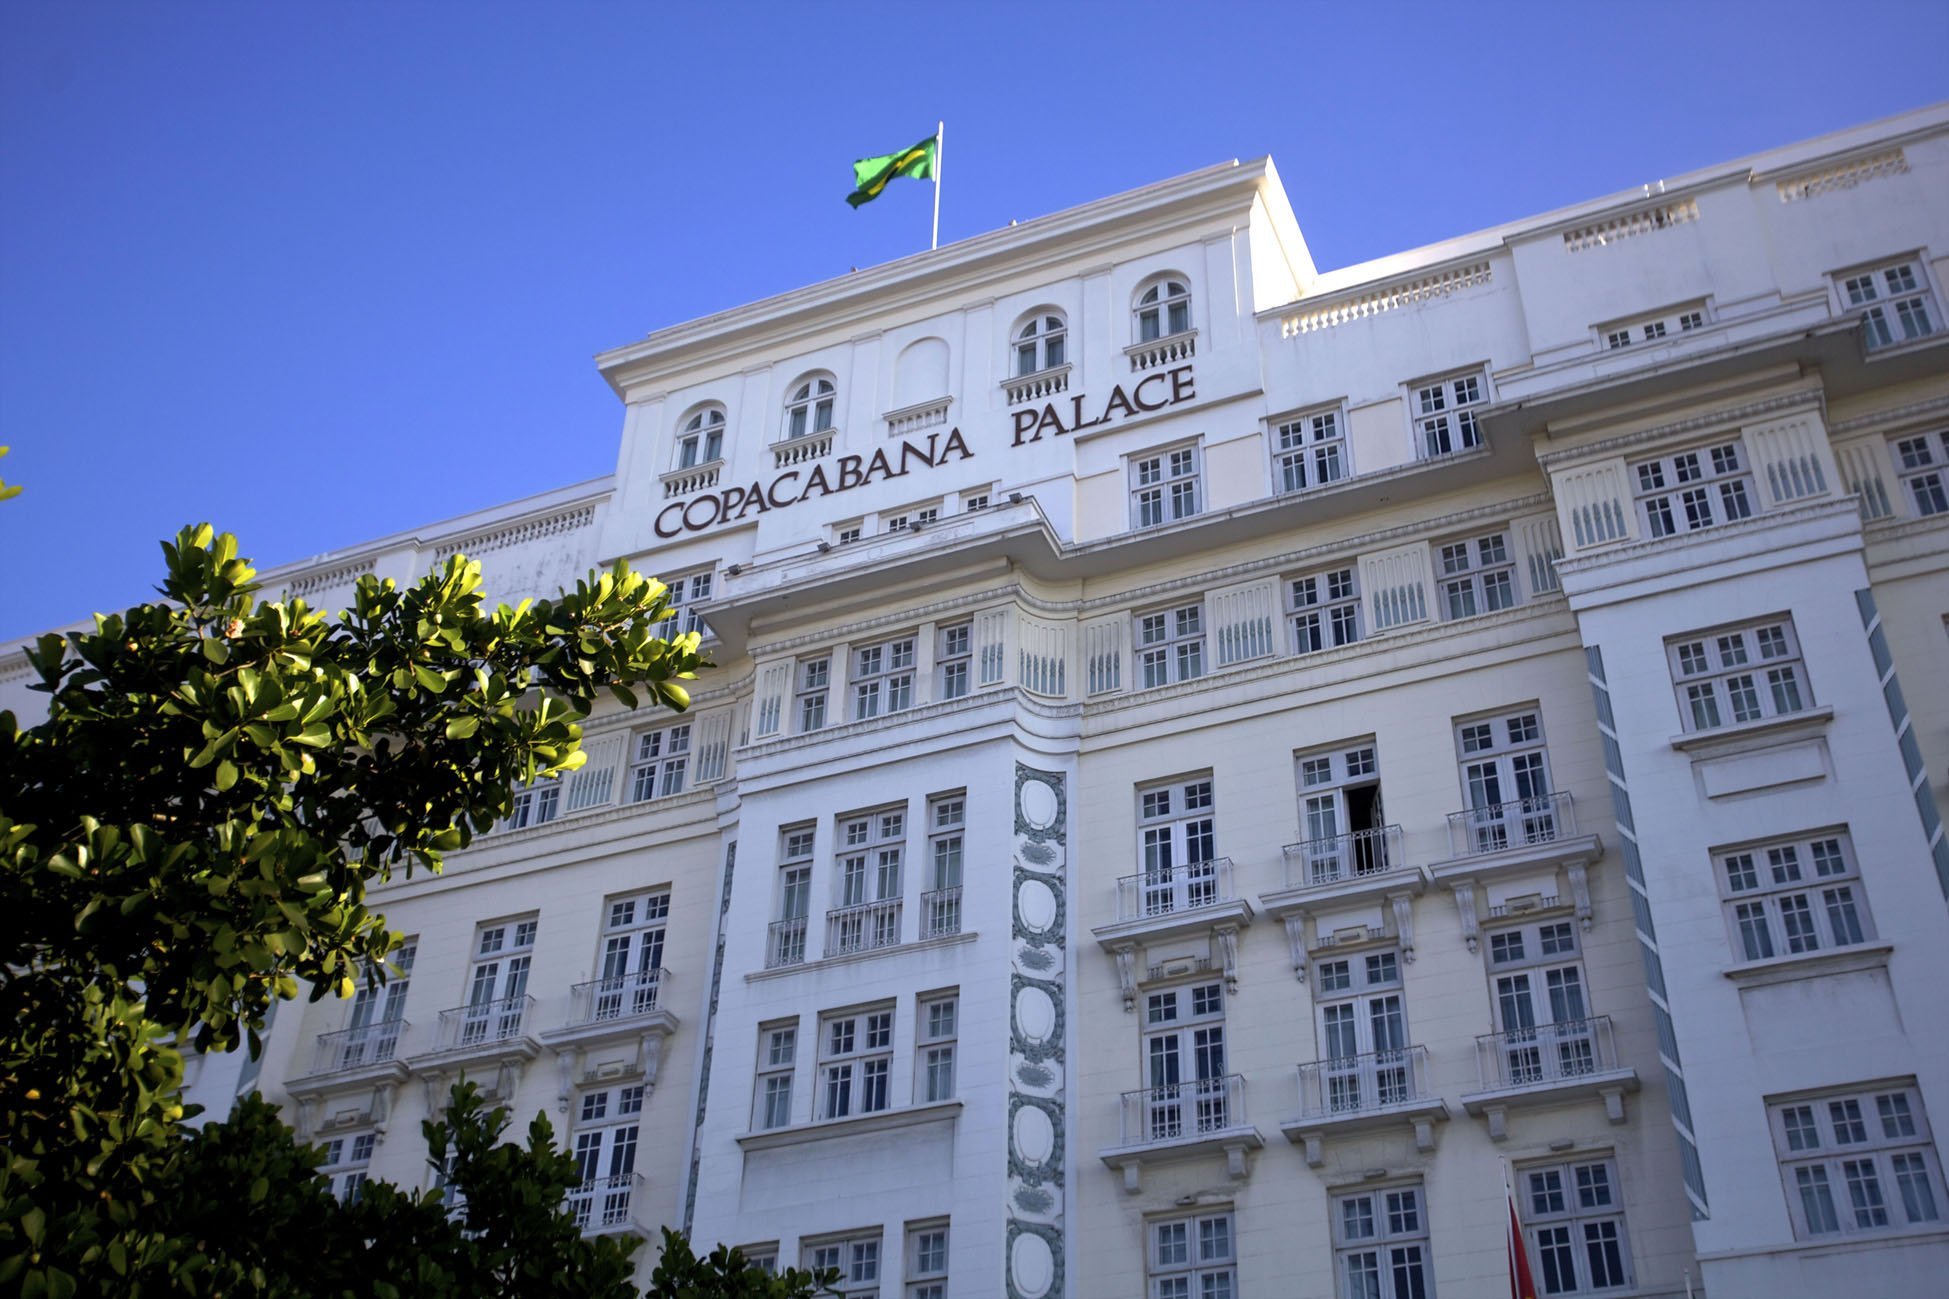 Copacabana Palace retomada atividades pandemia covid-19 crise setor hoteleiro